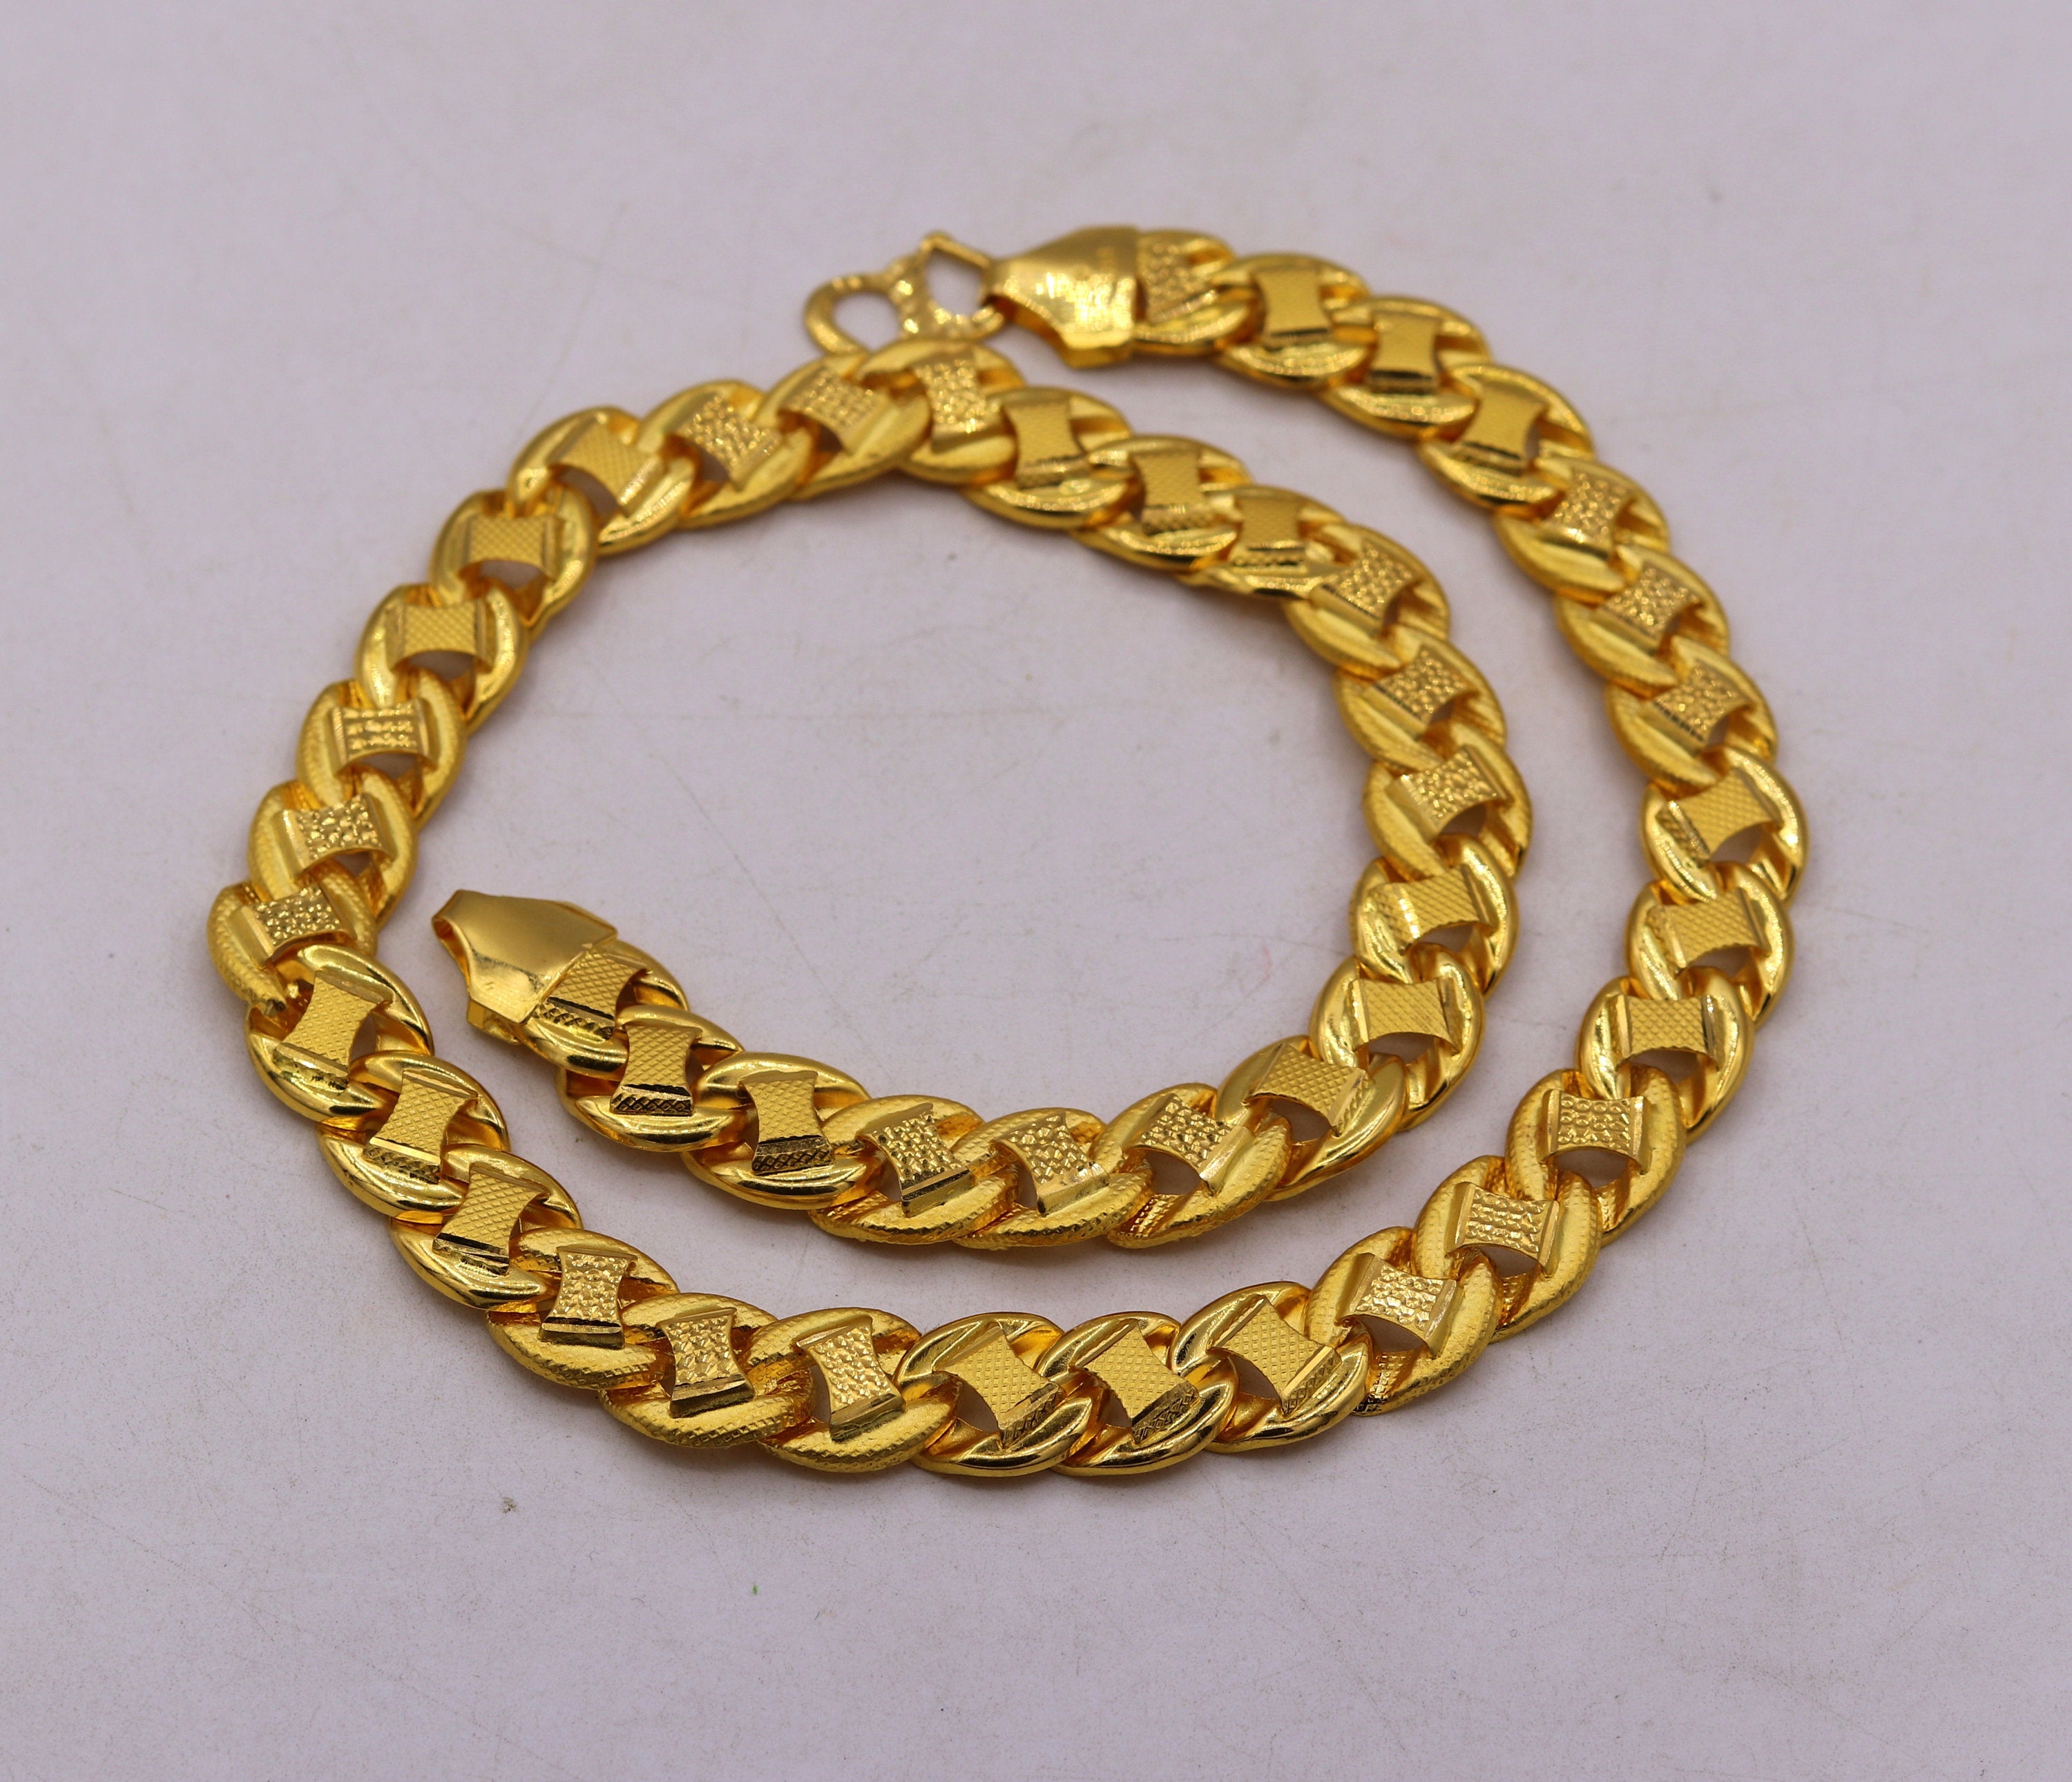 Wholesale 2017 New Gold Bracelet 22k Gold Bracelet Designs stainless Steel  316L Stainless Steel Chain  Link Bracelets Bracelets Bangles From  malibabacom